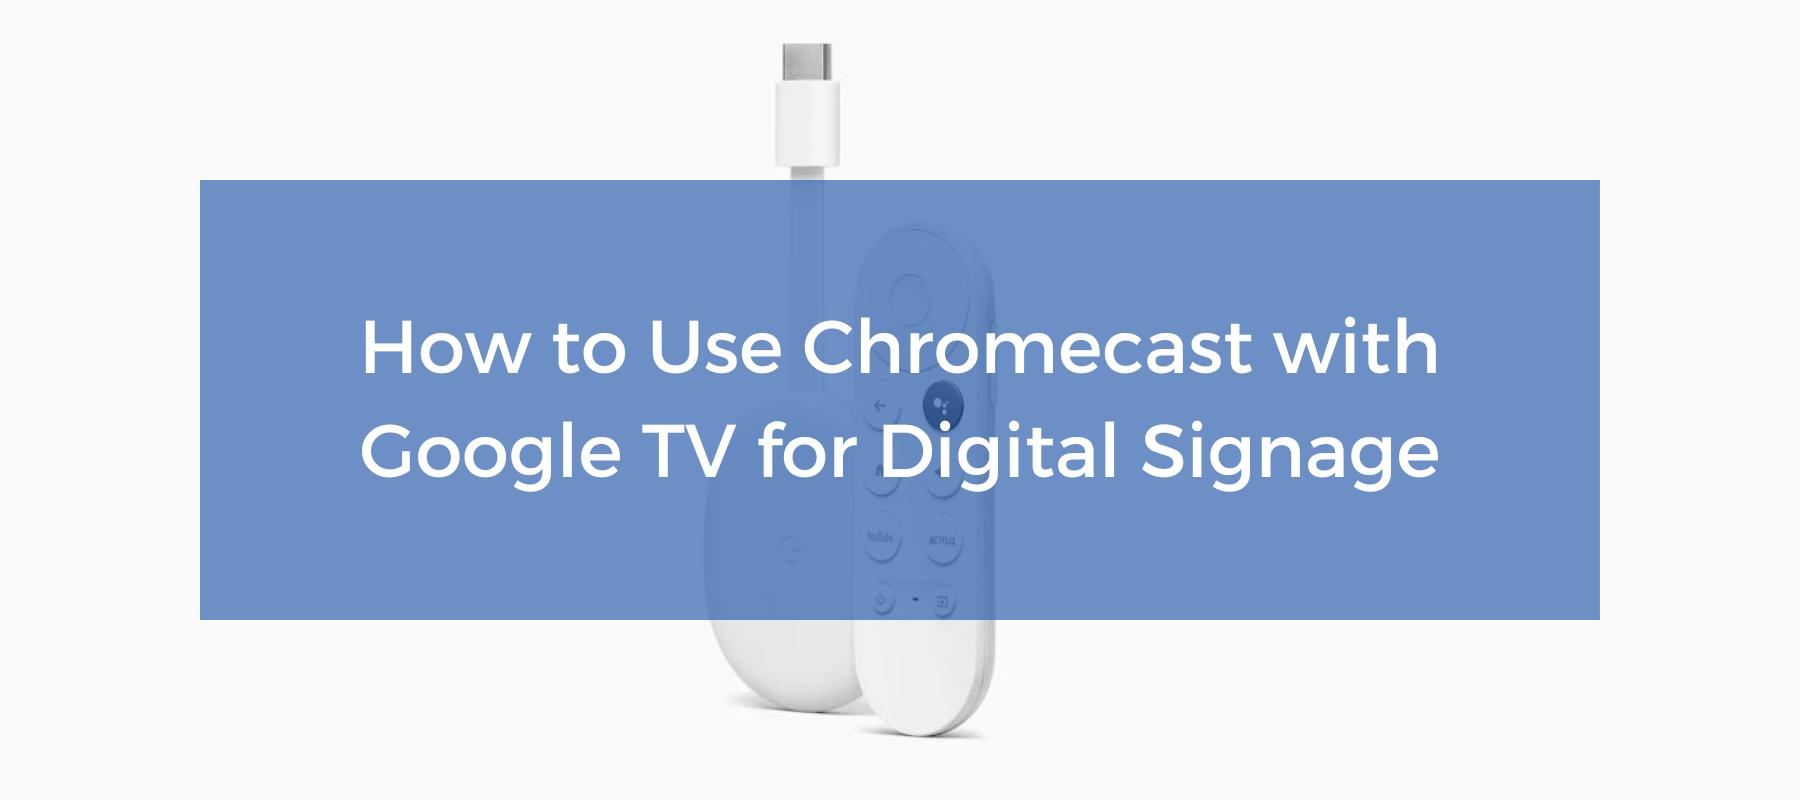 How to Use Chromecast with Google TV for Digital Signage